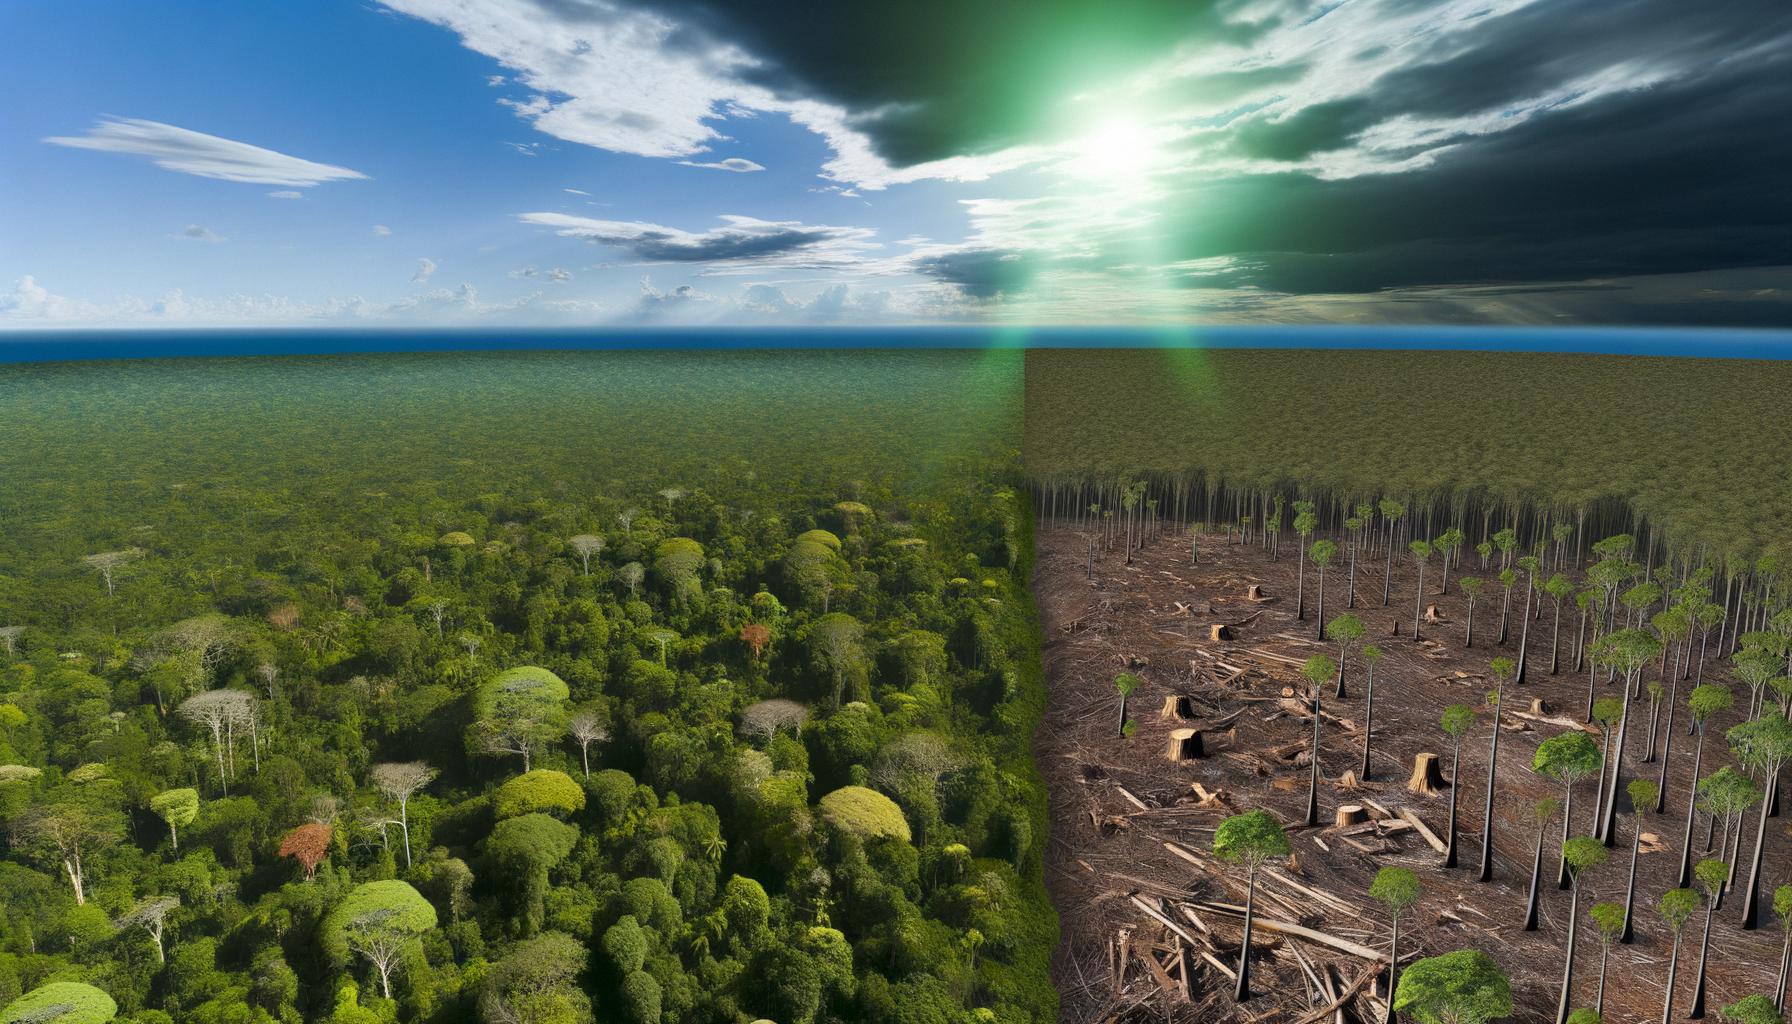 Deforestation exacerbates environmental and climate crises globally Balanced News